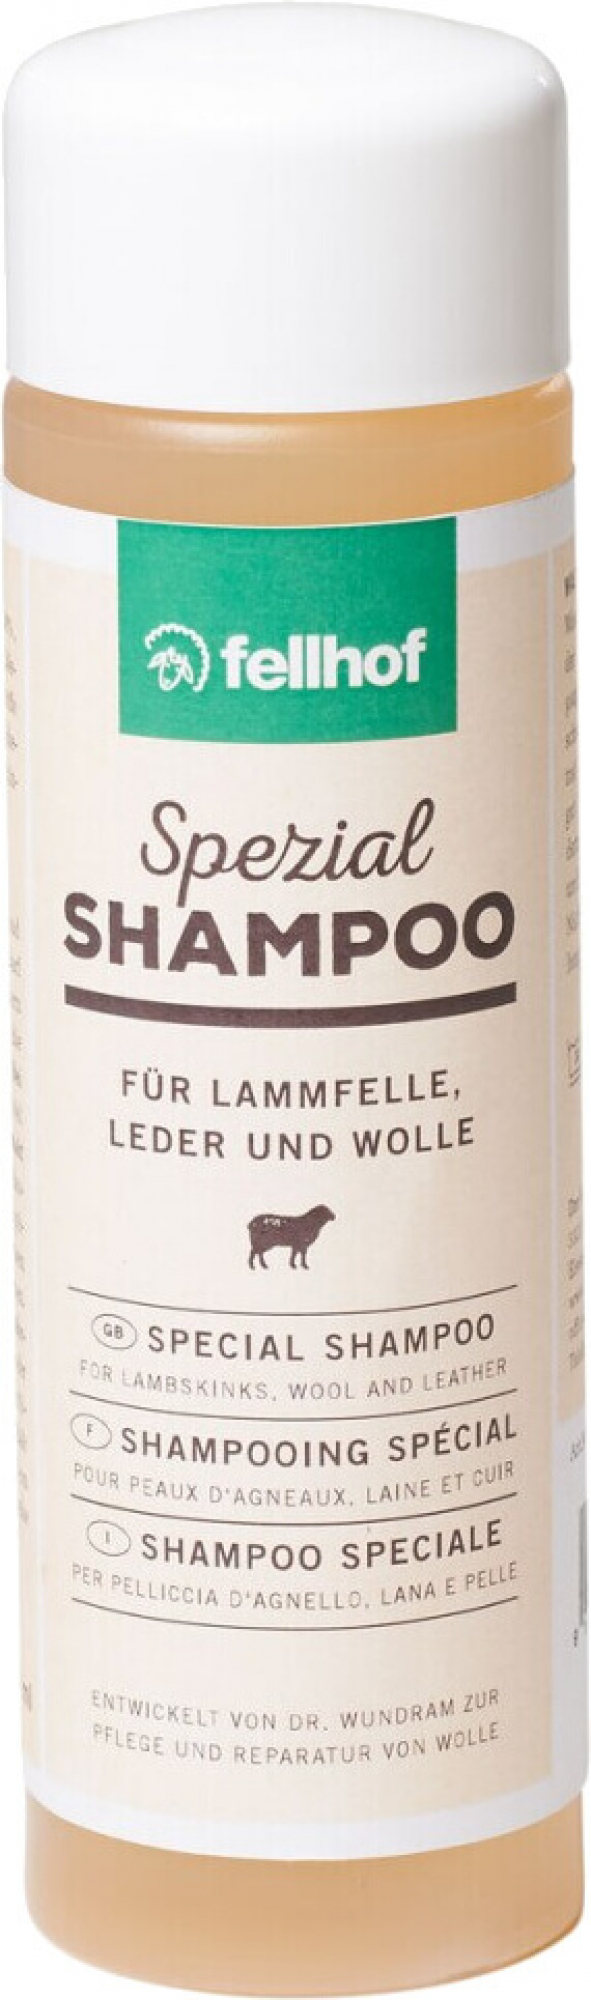 fellhof Spezialshampoo für Lammfelle (250 ml)